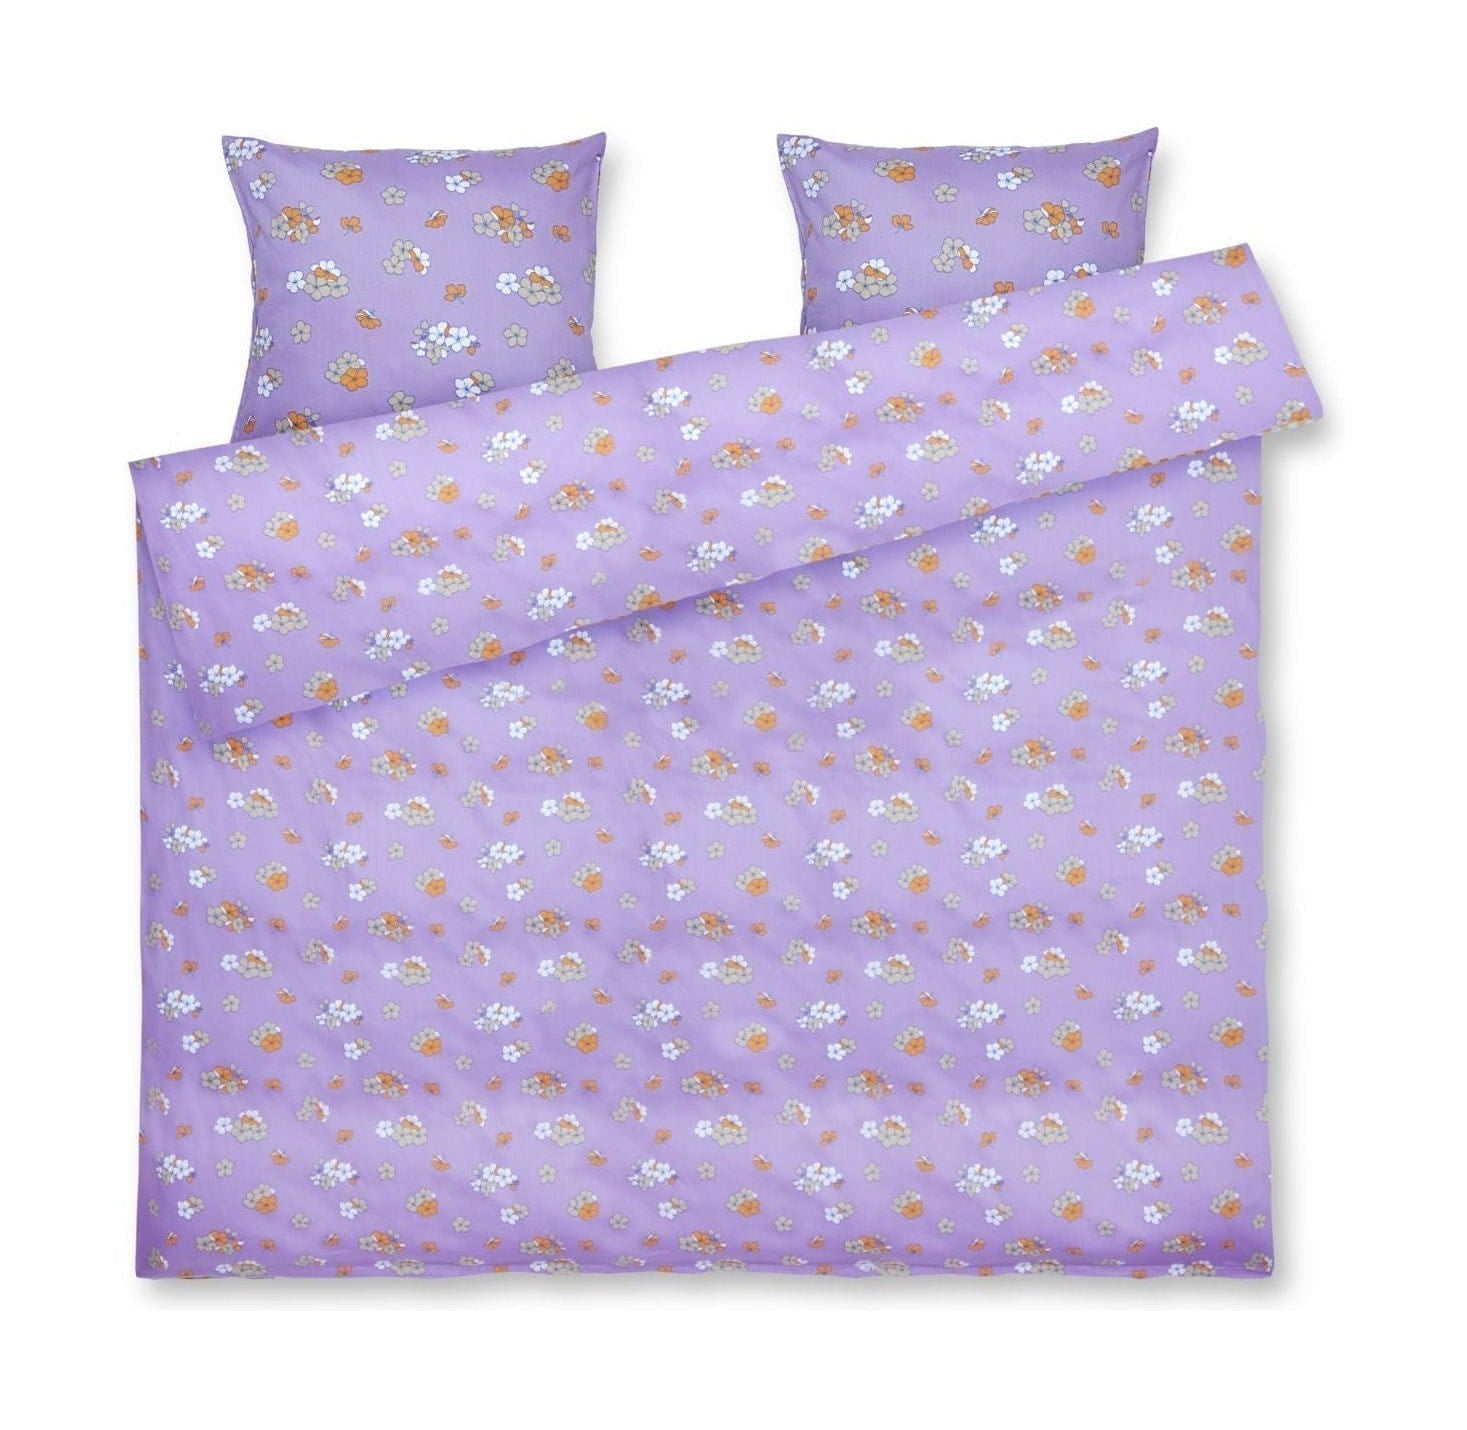 Juna Grand Pleasantly Bed Linen 200x220 Cm, Purple